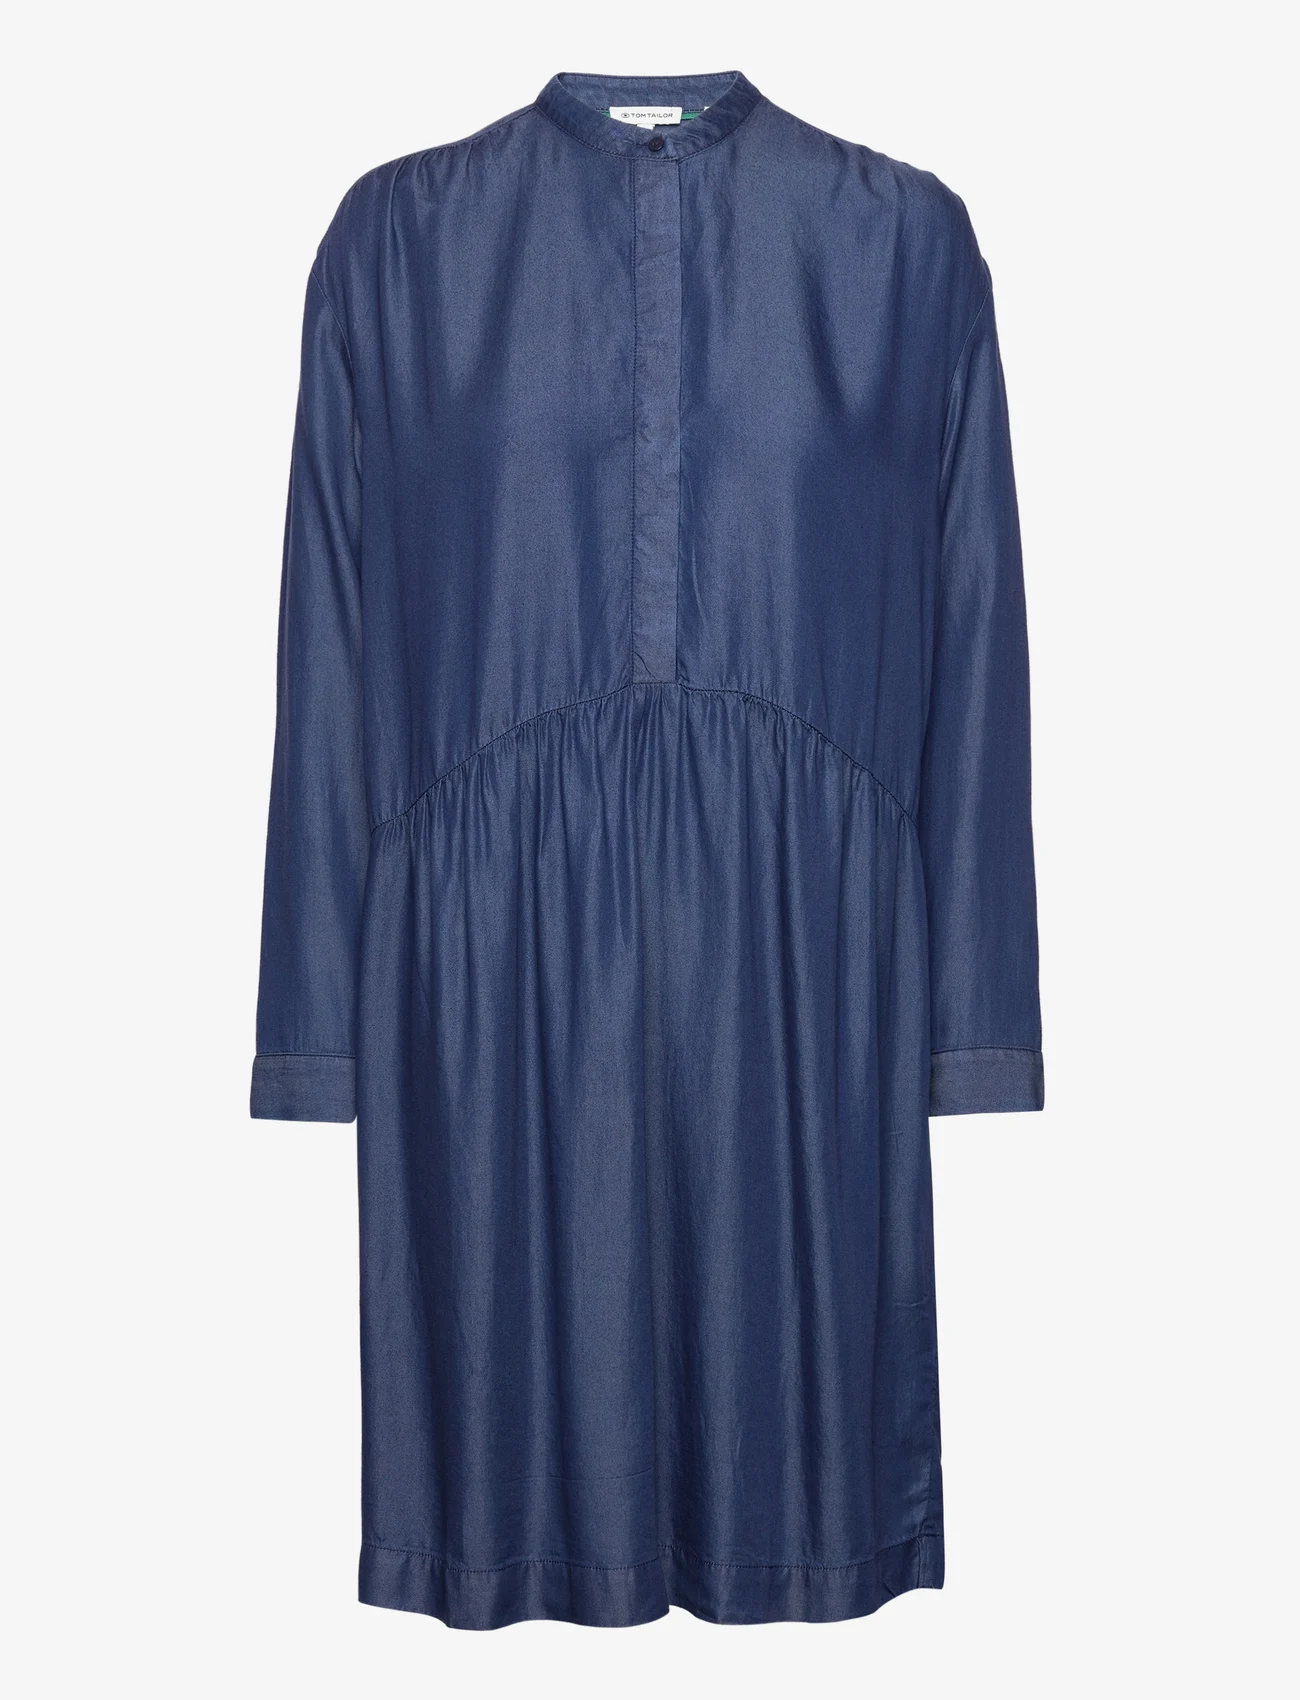 Tom Tailor - dress denim look - korte jurken - clean mid stone blue denim - 0